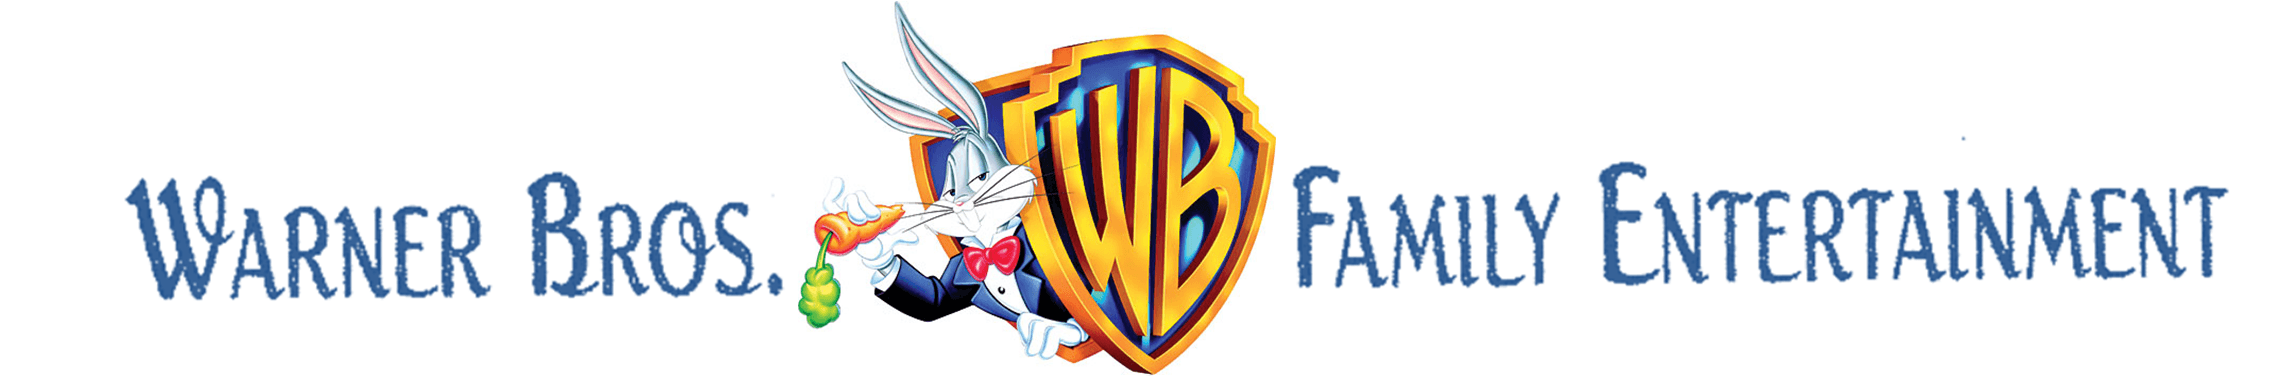 Warner Bros Feature Presentation Logo - Warner bros family entertainment Logos